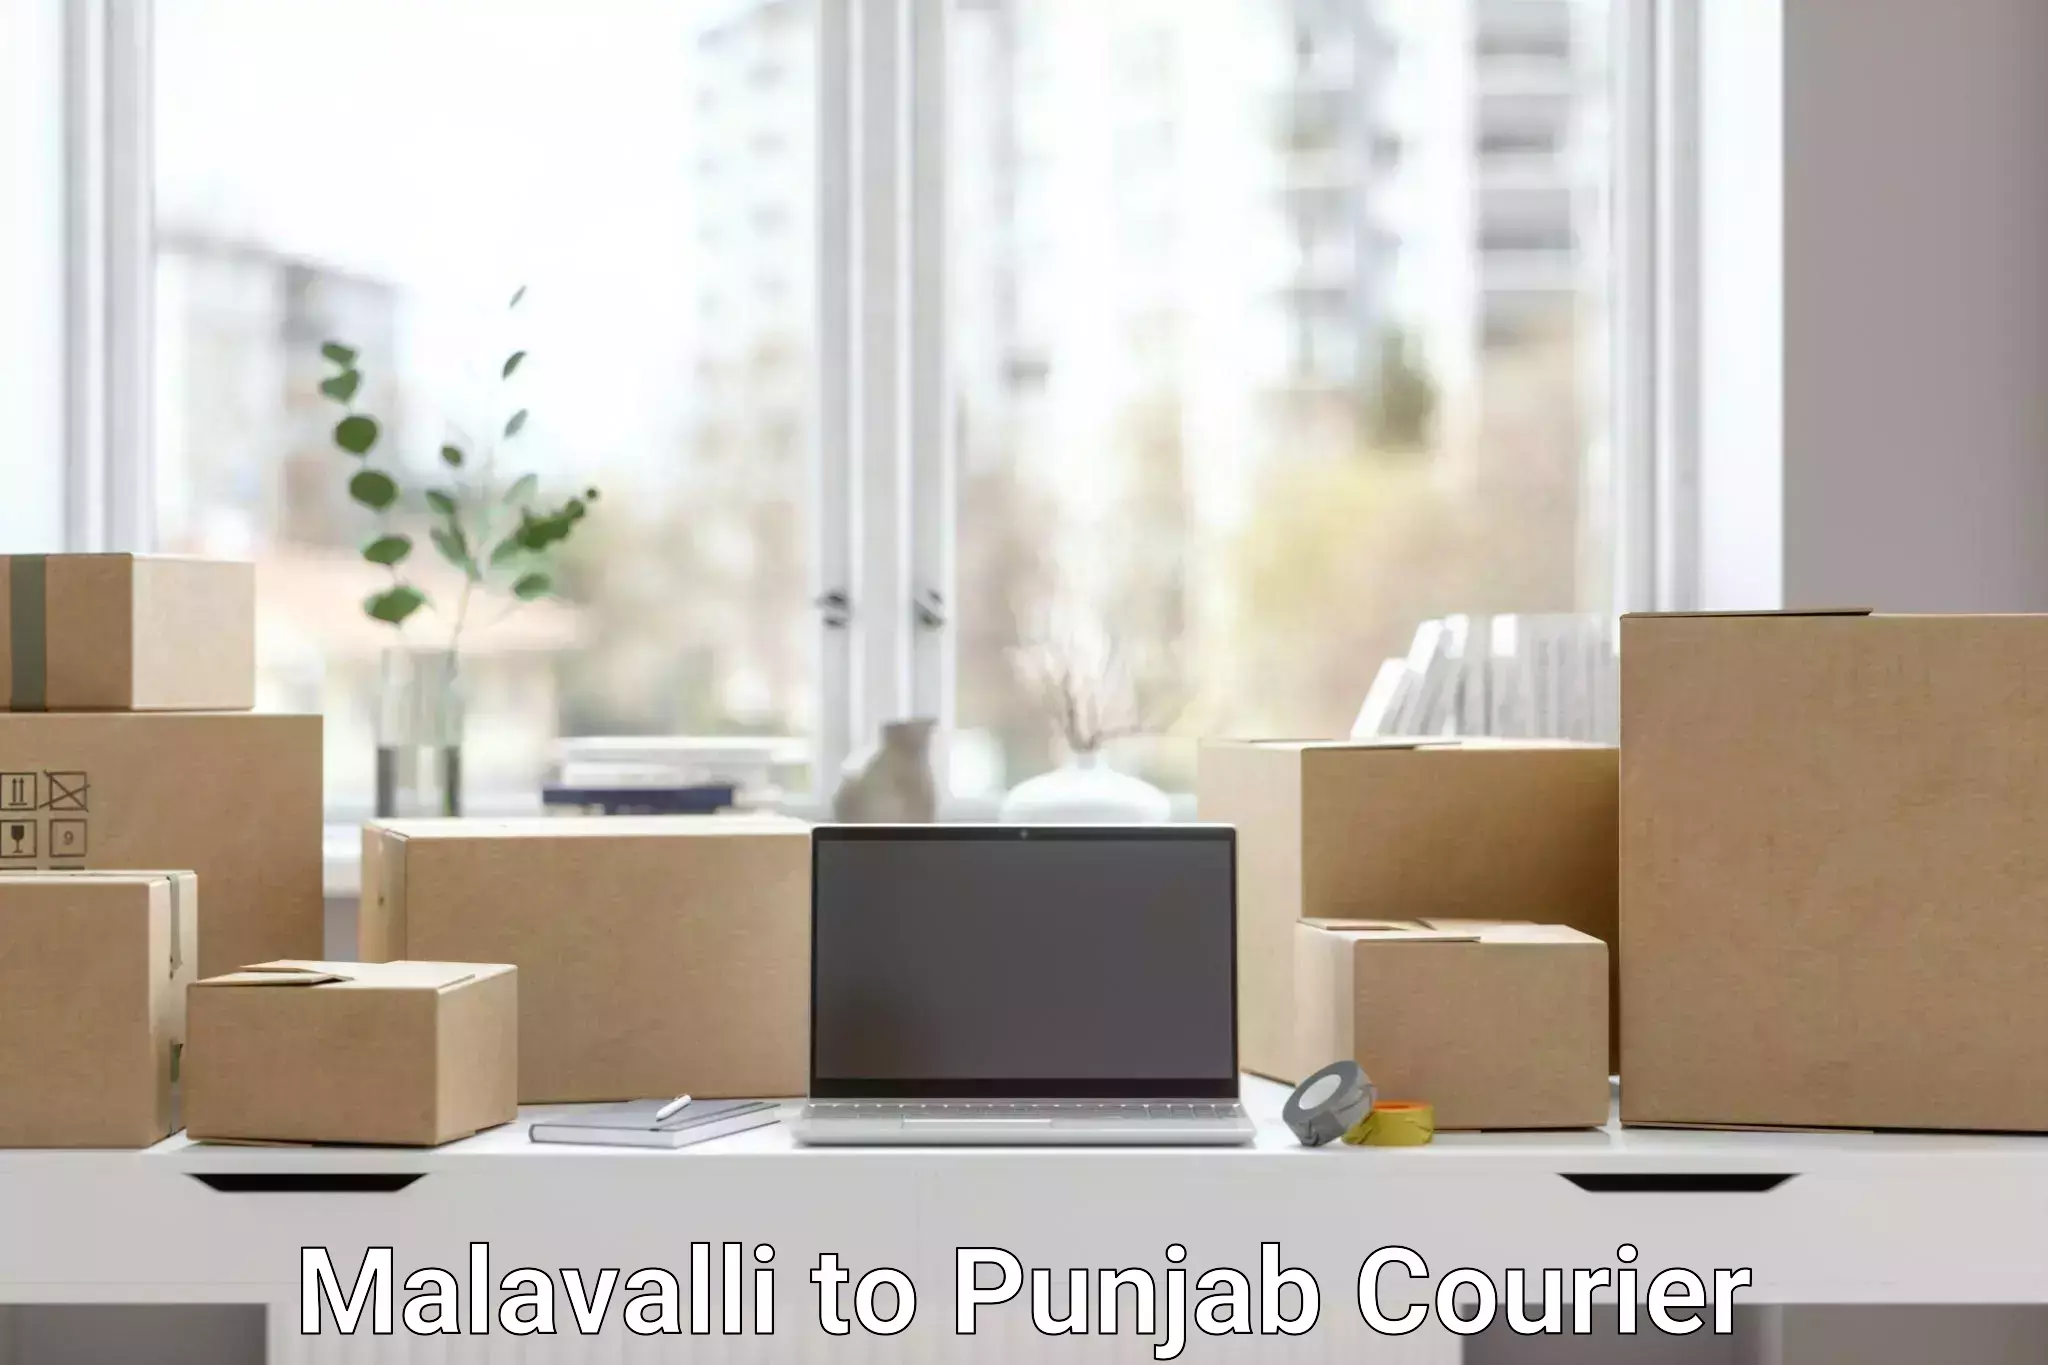 Doorstep delivery service Malavalli to Punjab